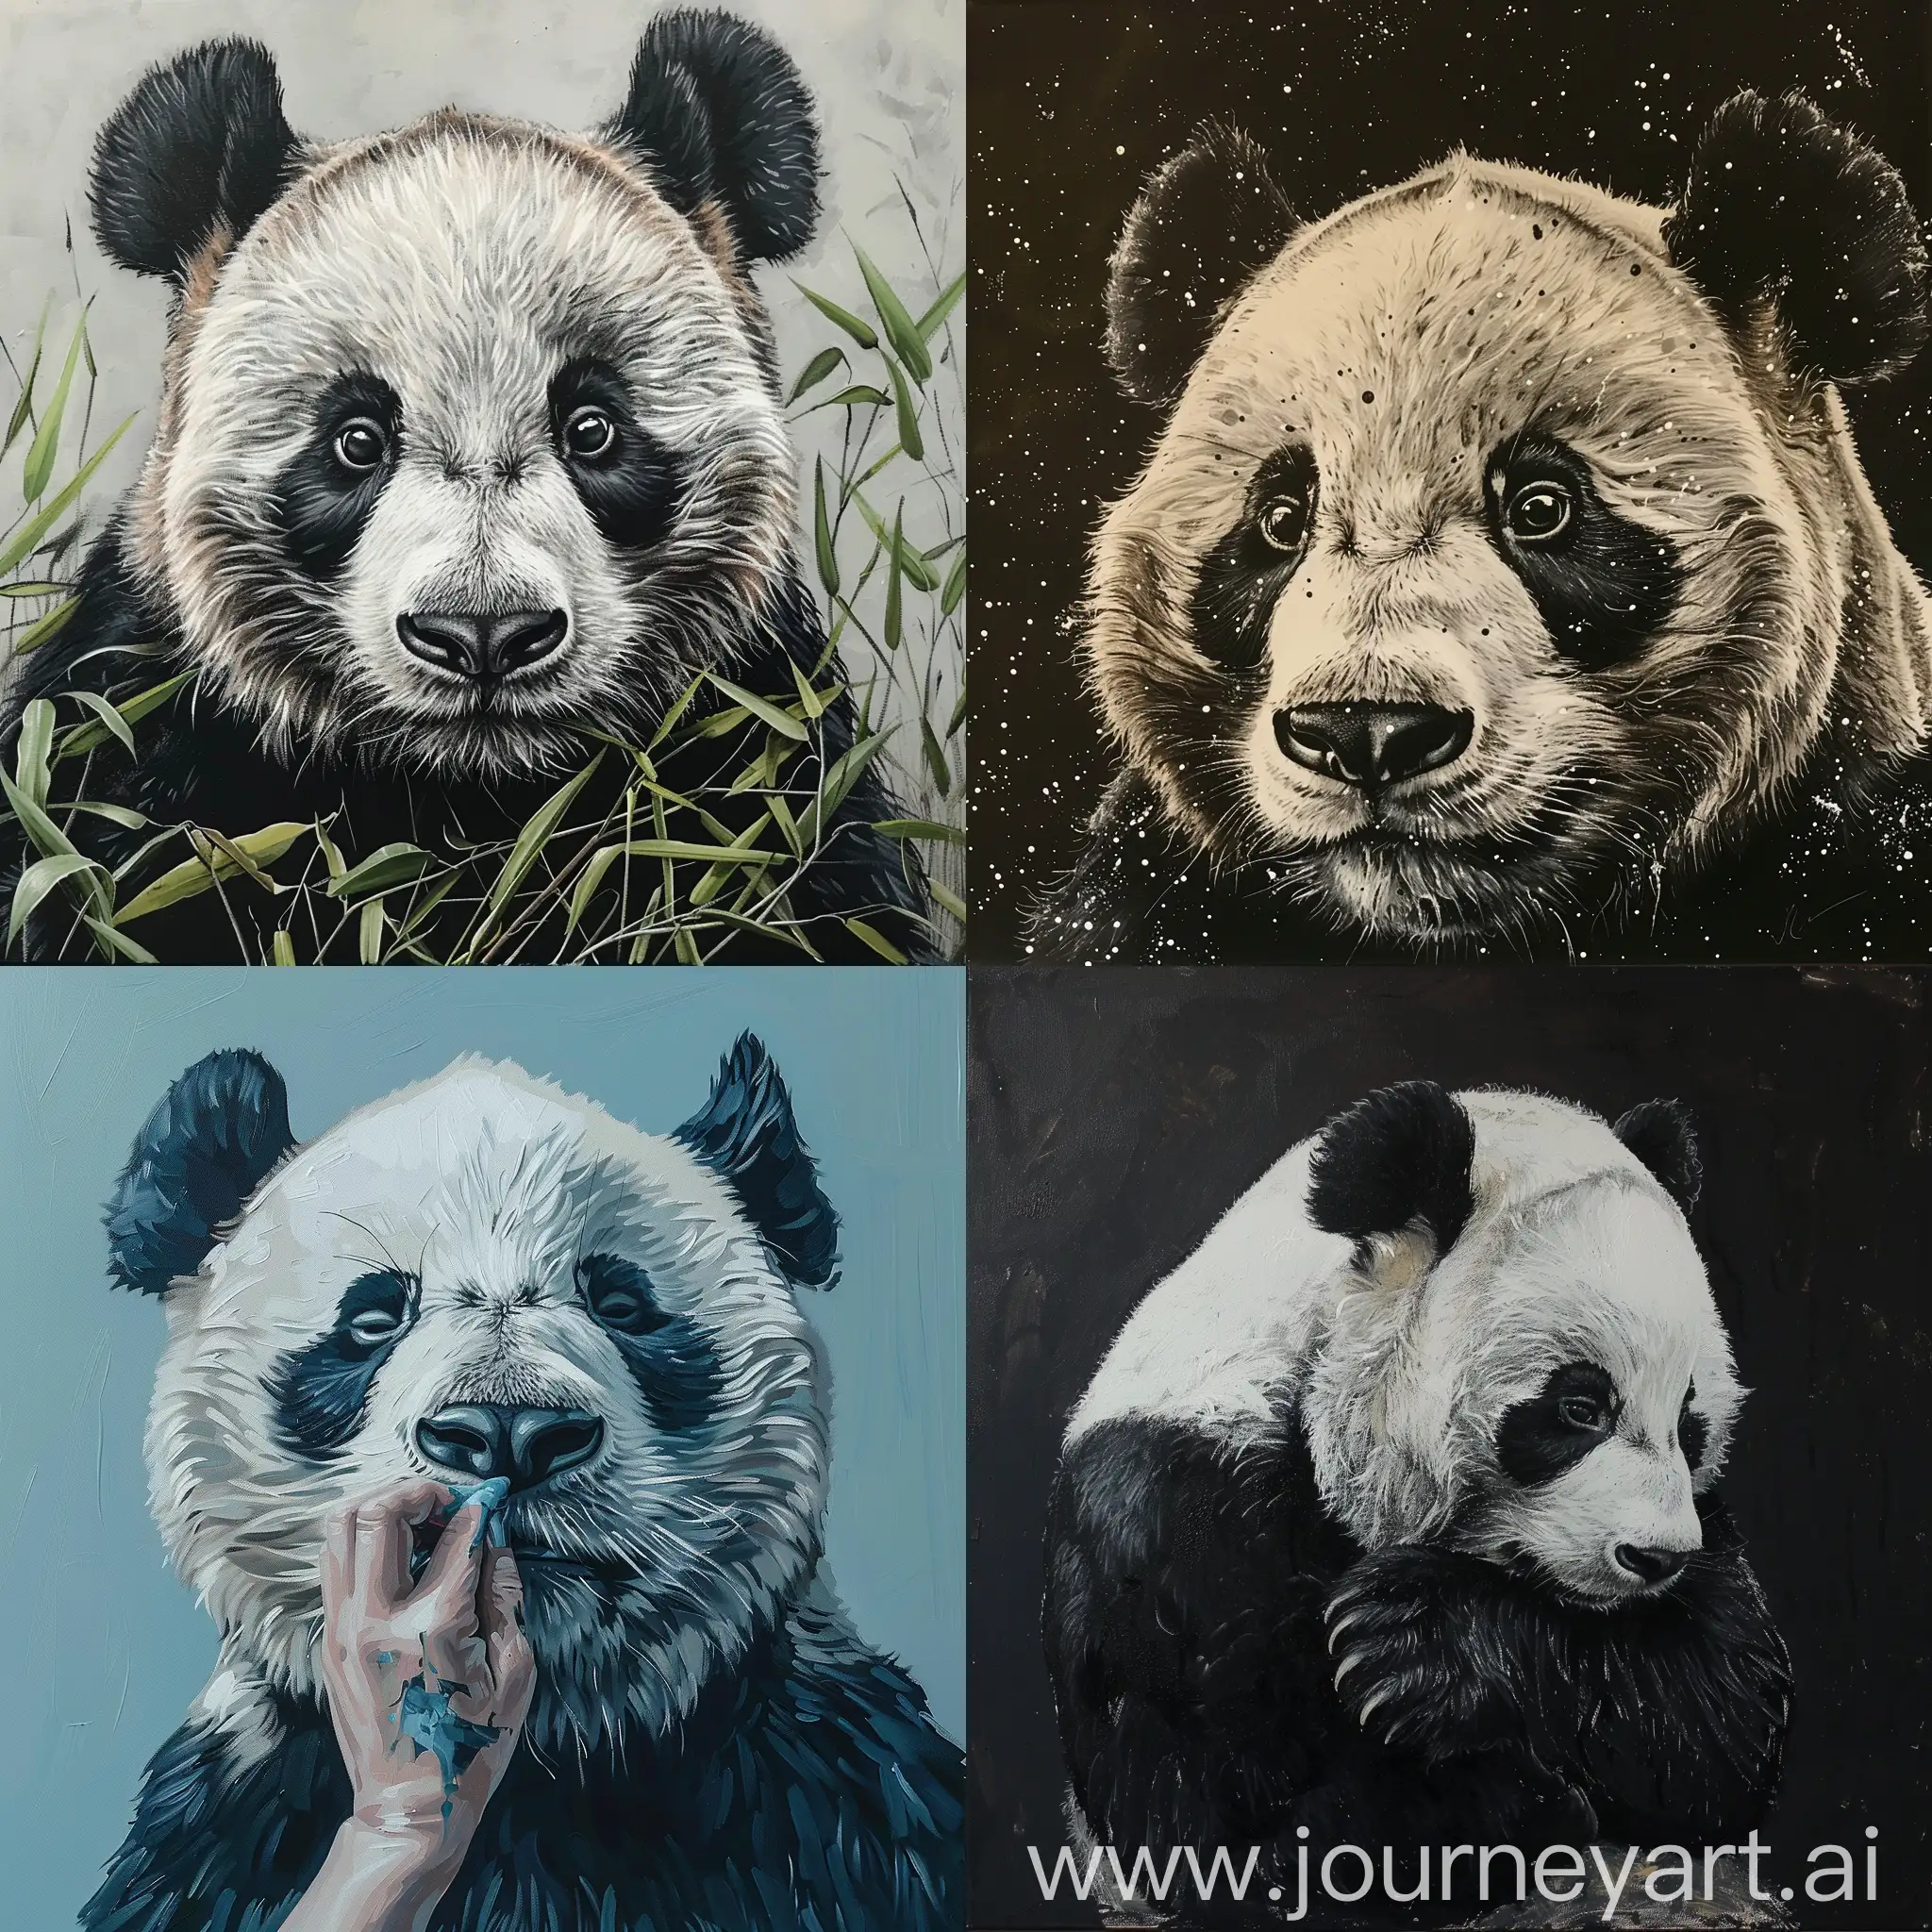 Surreal-HandDrawn-Panda-Art-Realistic-Painting-in-11-Aspect-Ratio